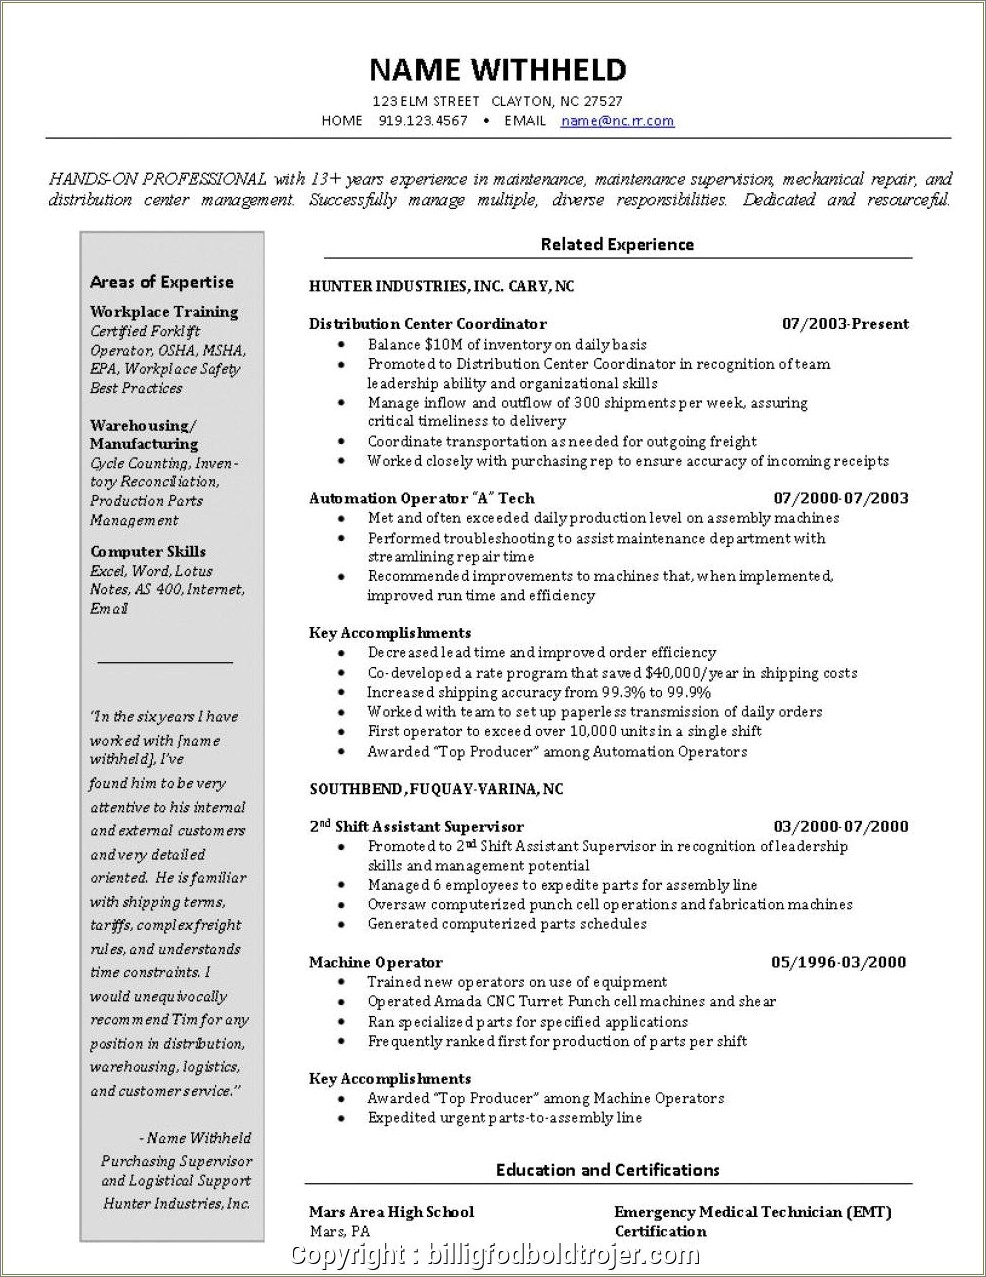 Food Production Operations Manager Job Description Resume